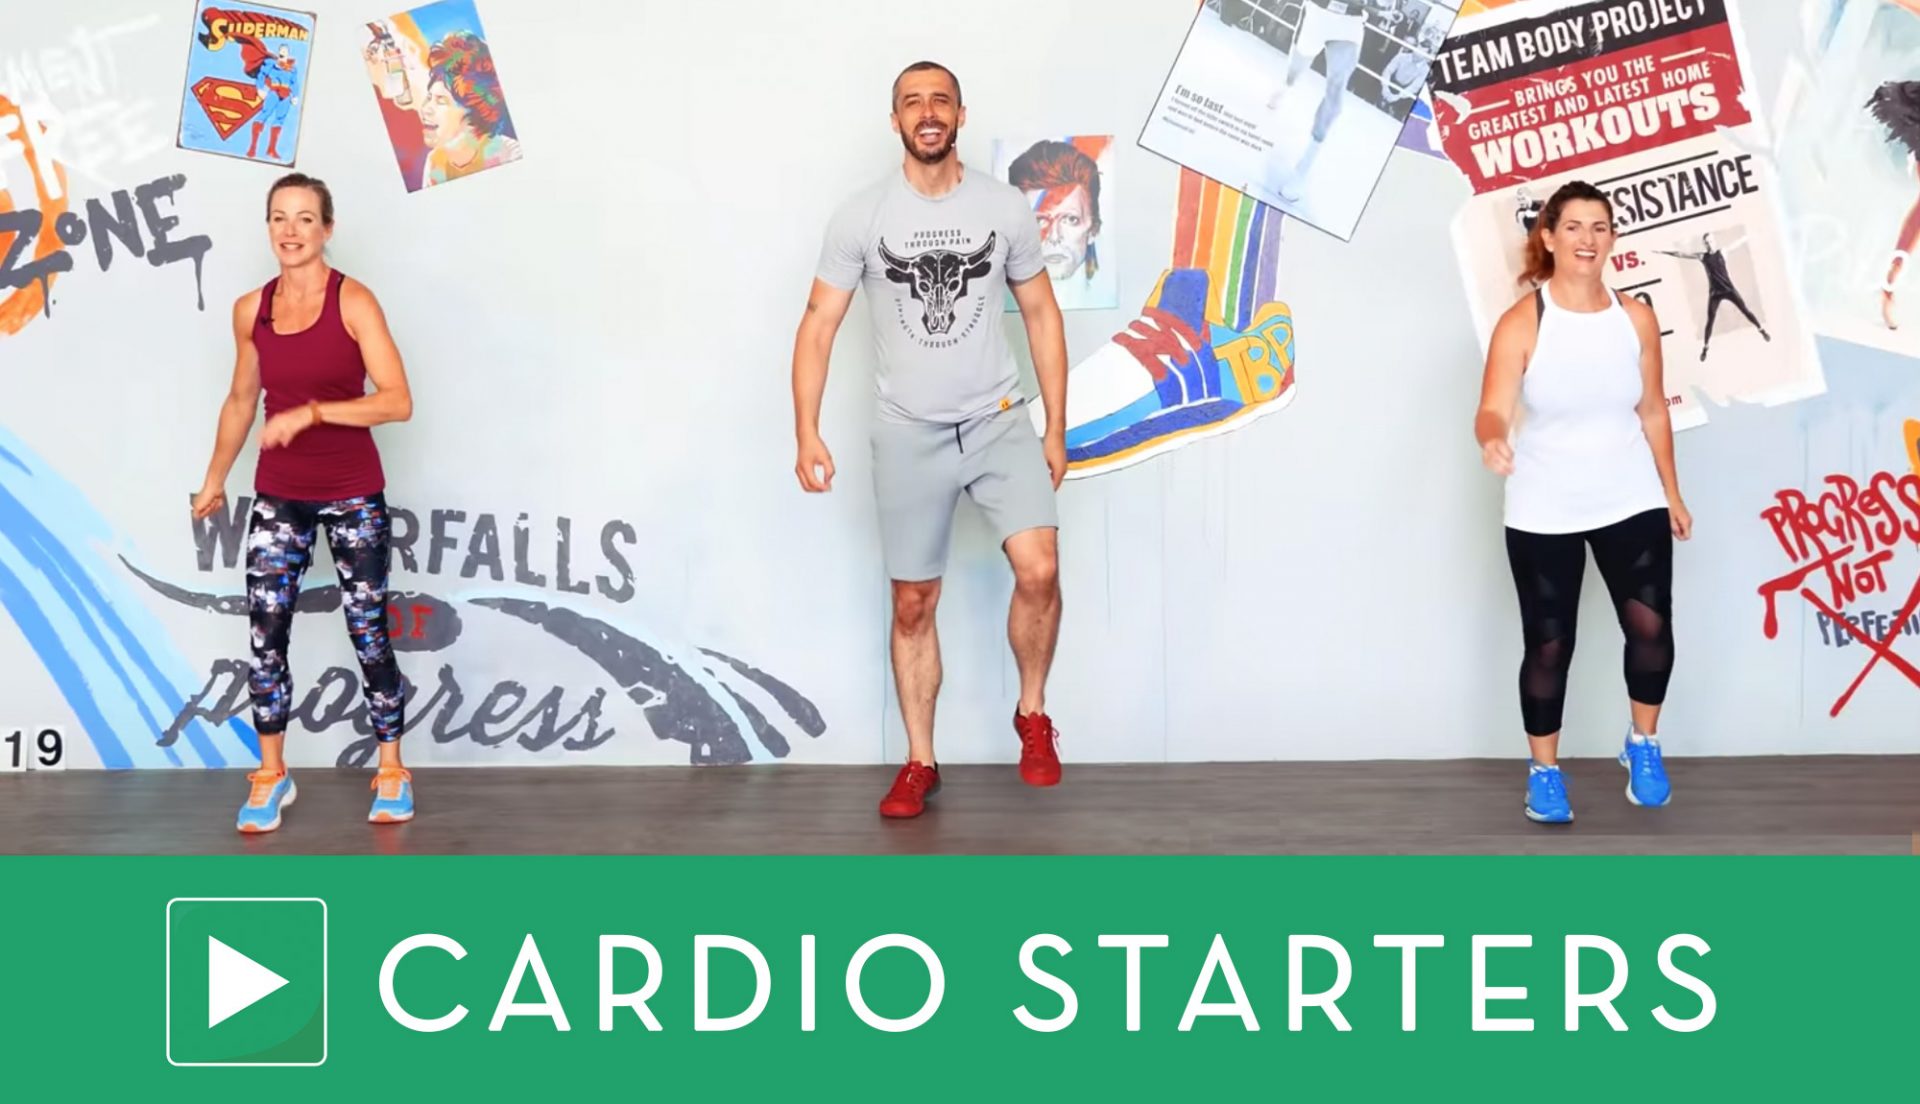 Cardio Starters Team Body Project